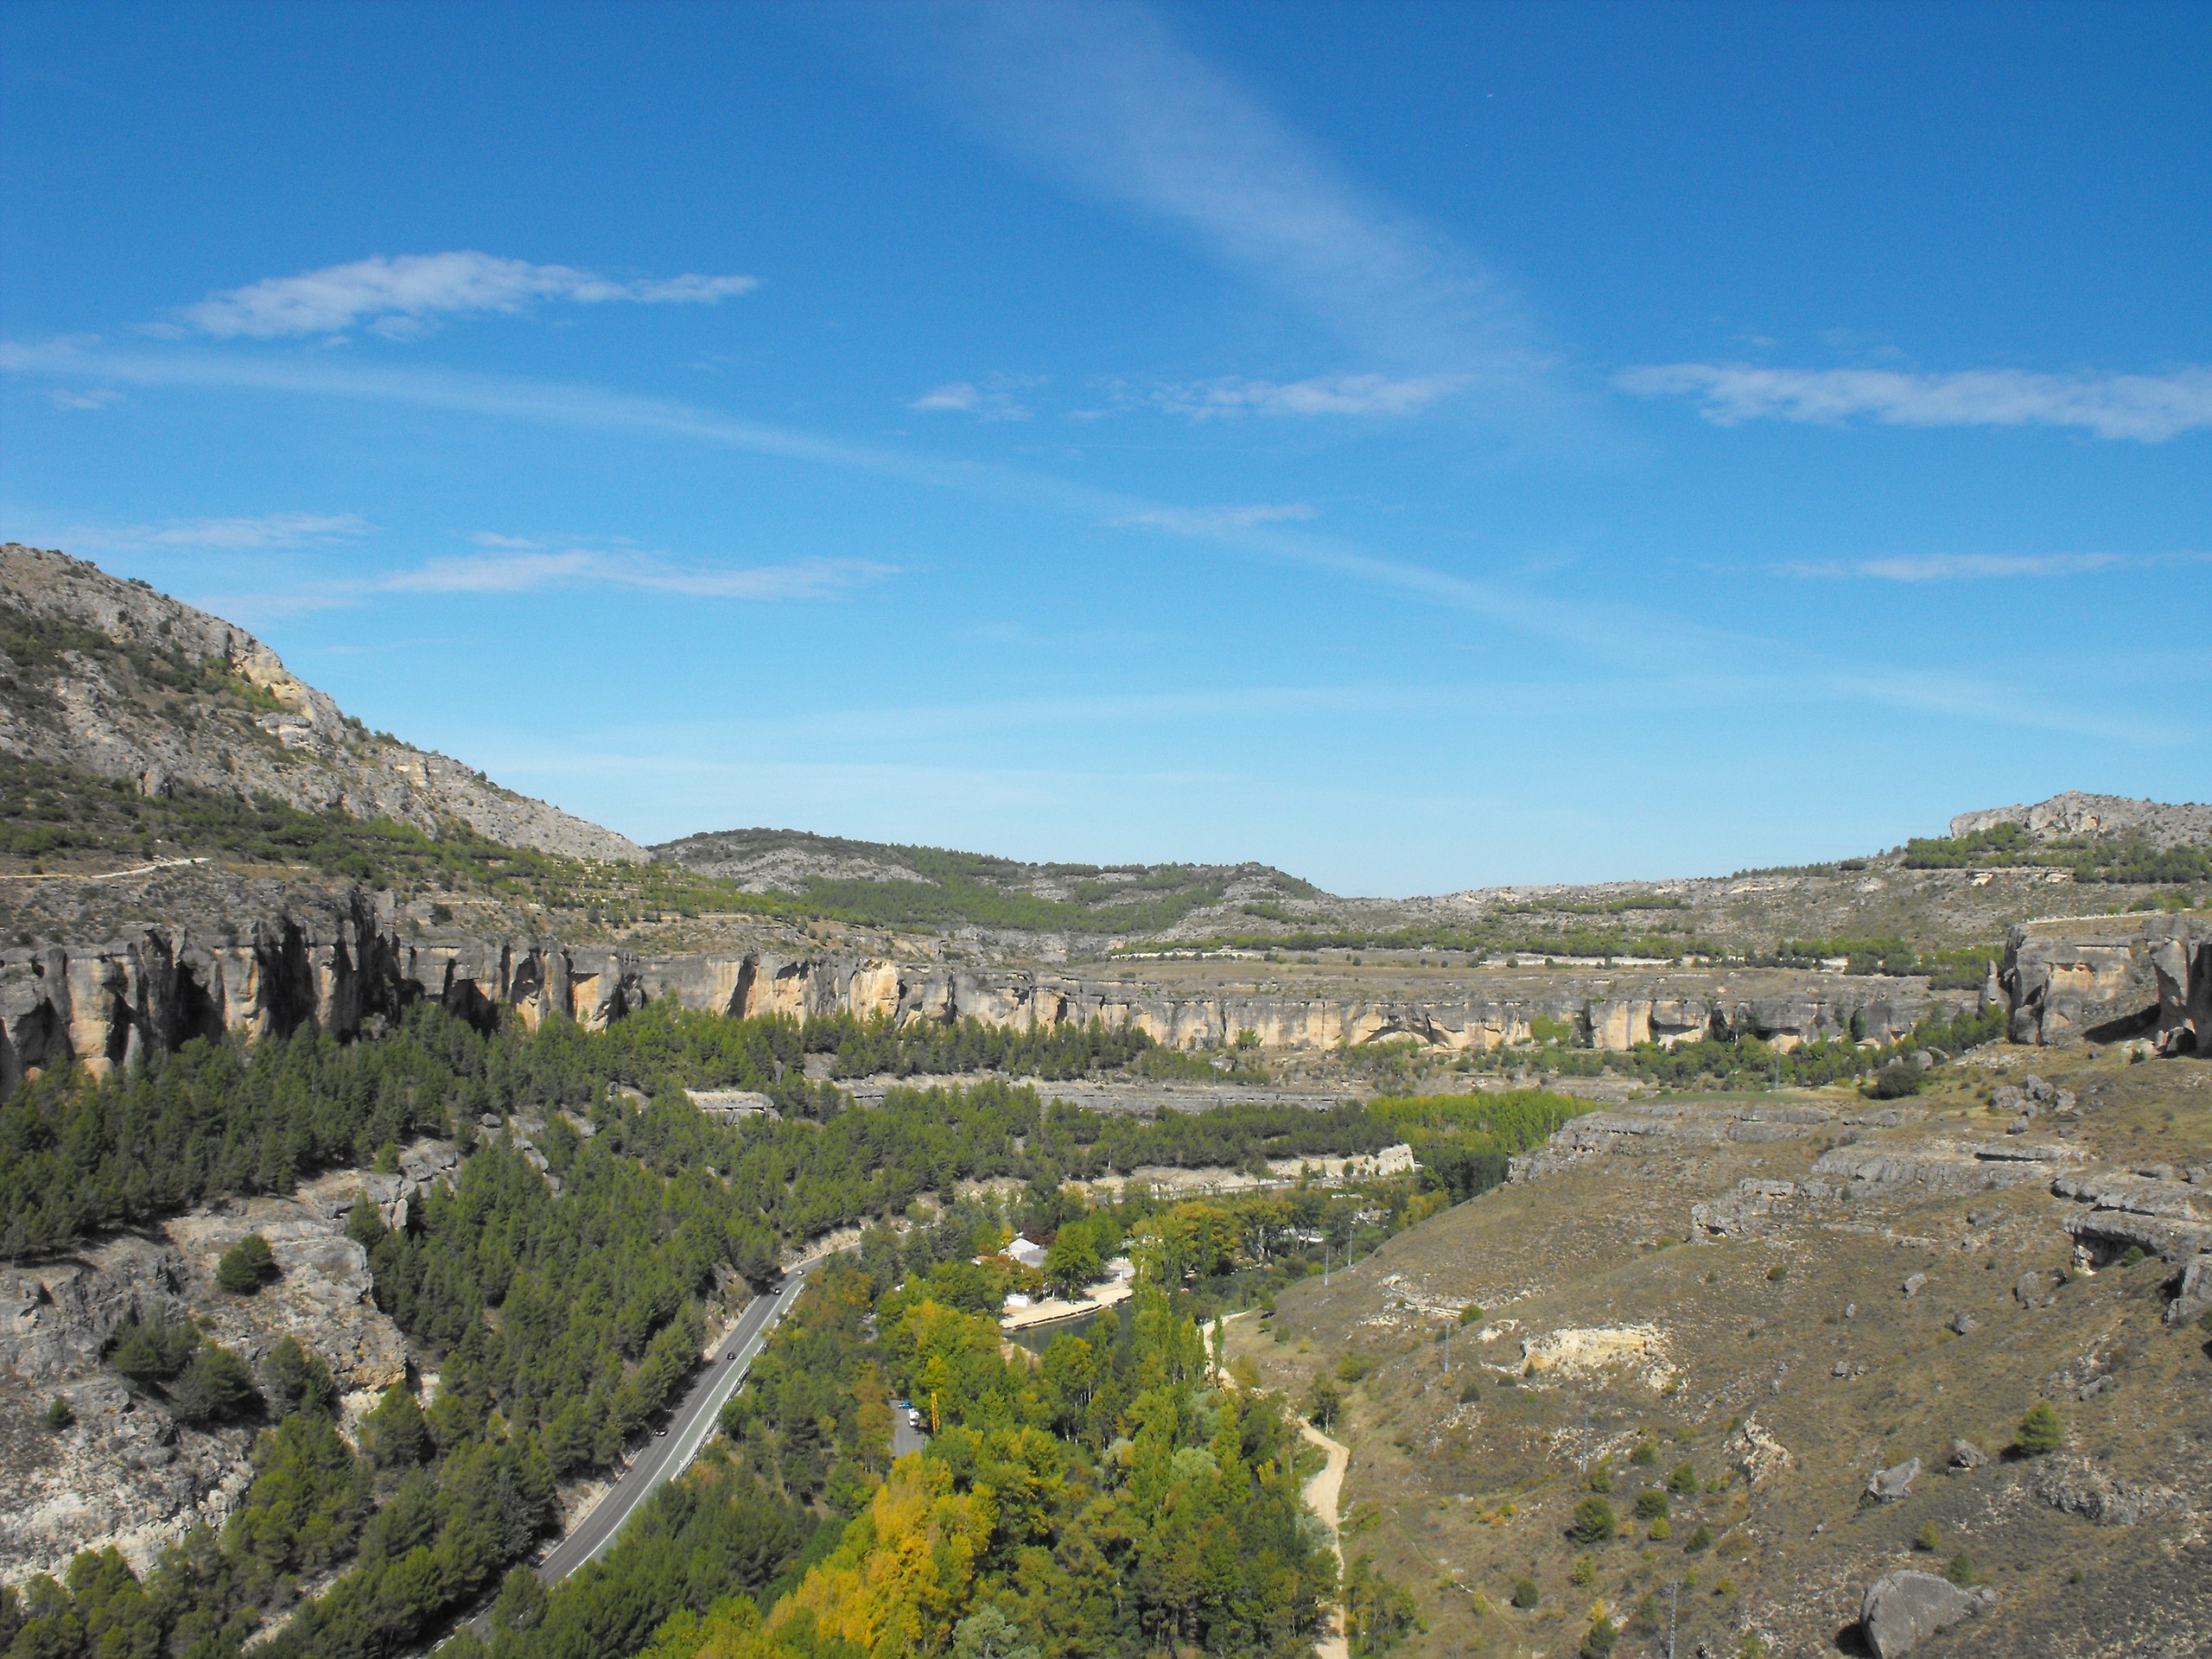 2560px-Gorge_of_Jucar_river_in_autumn_-_Cuenca_-_Spain_-_panoramio.jpg